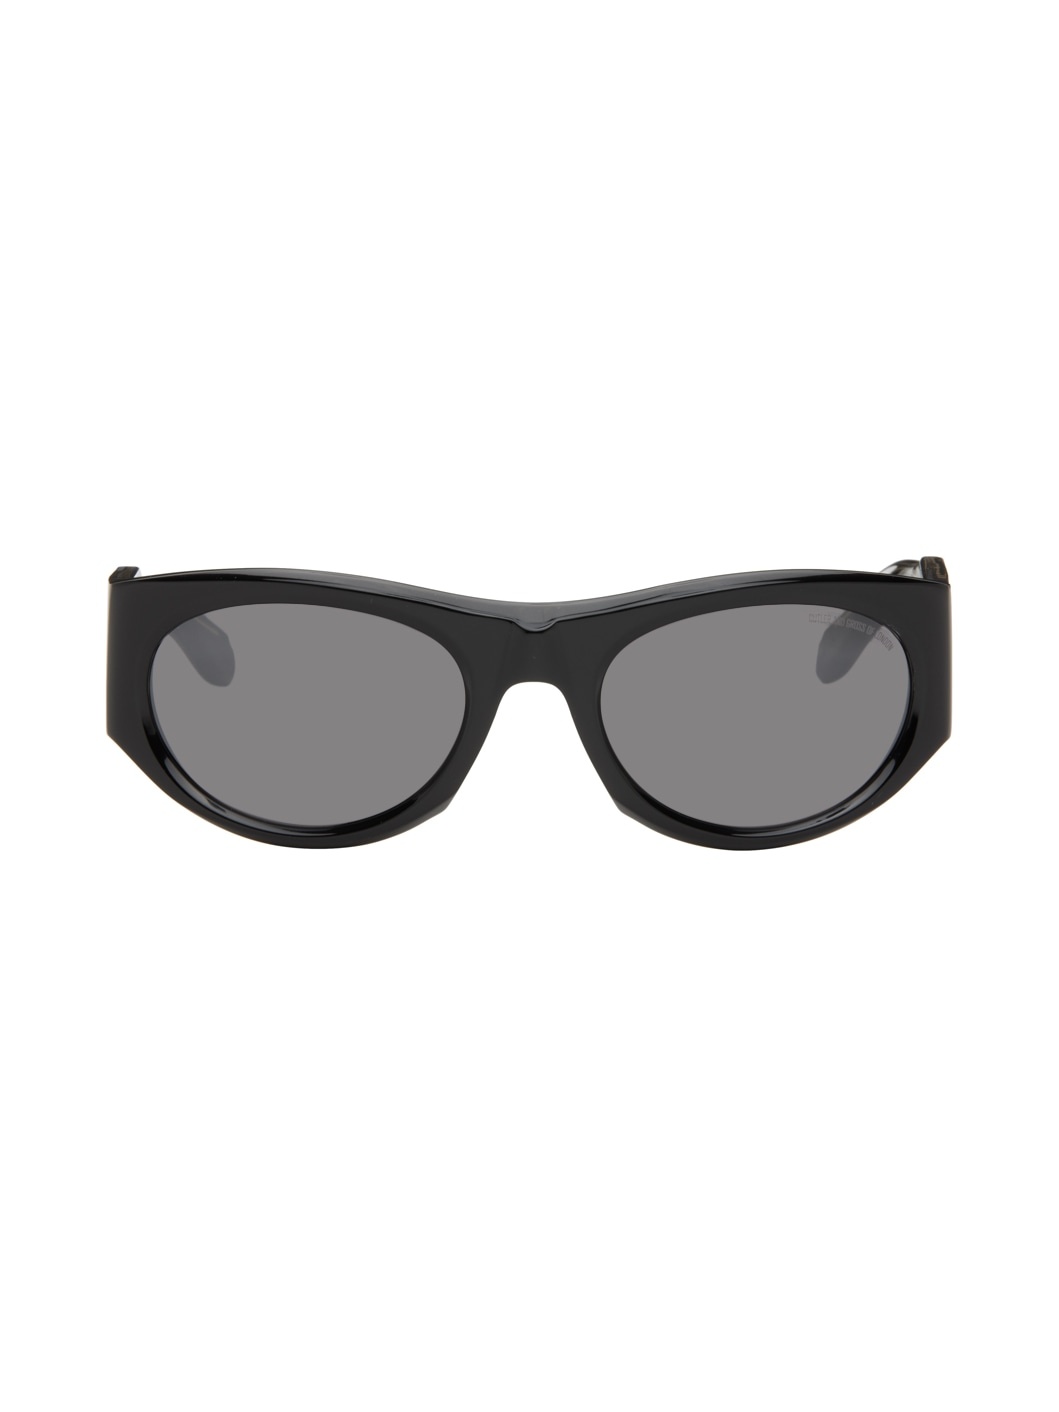 Black 9276 Sunglasses - 1